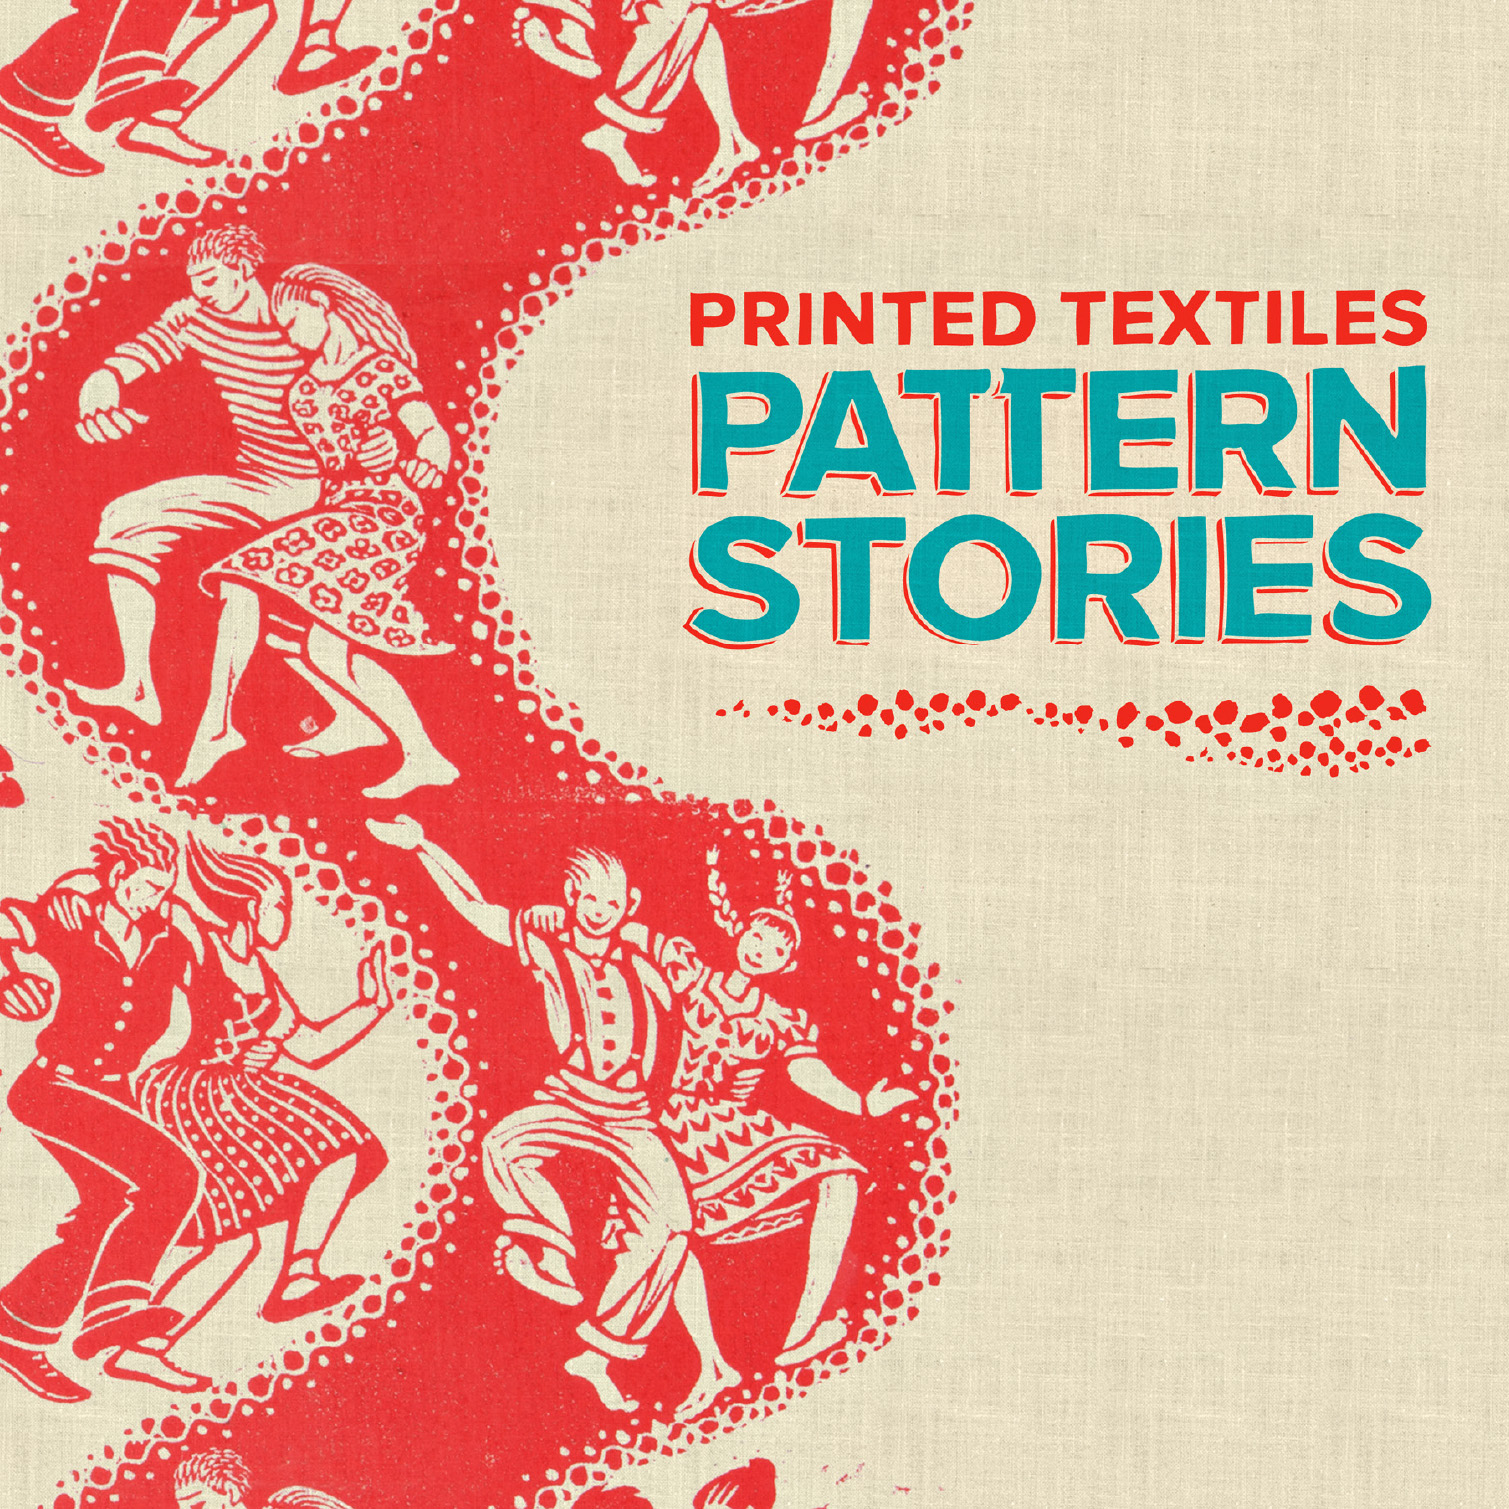 Printed Textiles: Pattern Stories